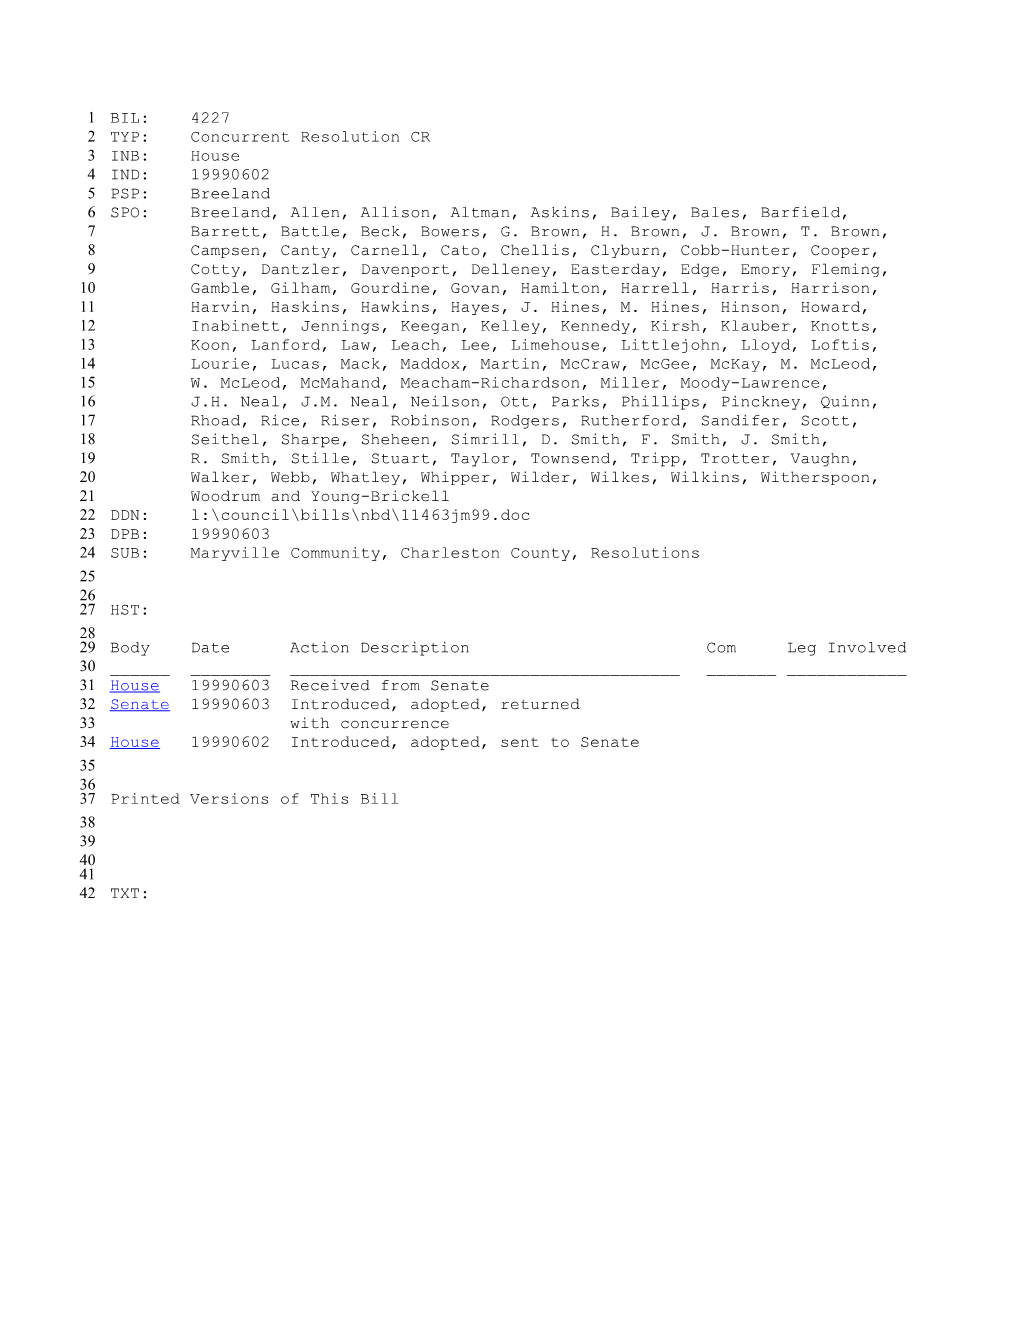 1999-2000 Bill 4227: Maryville Community, Charleston County, Resolutions - South Carolina